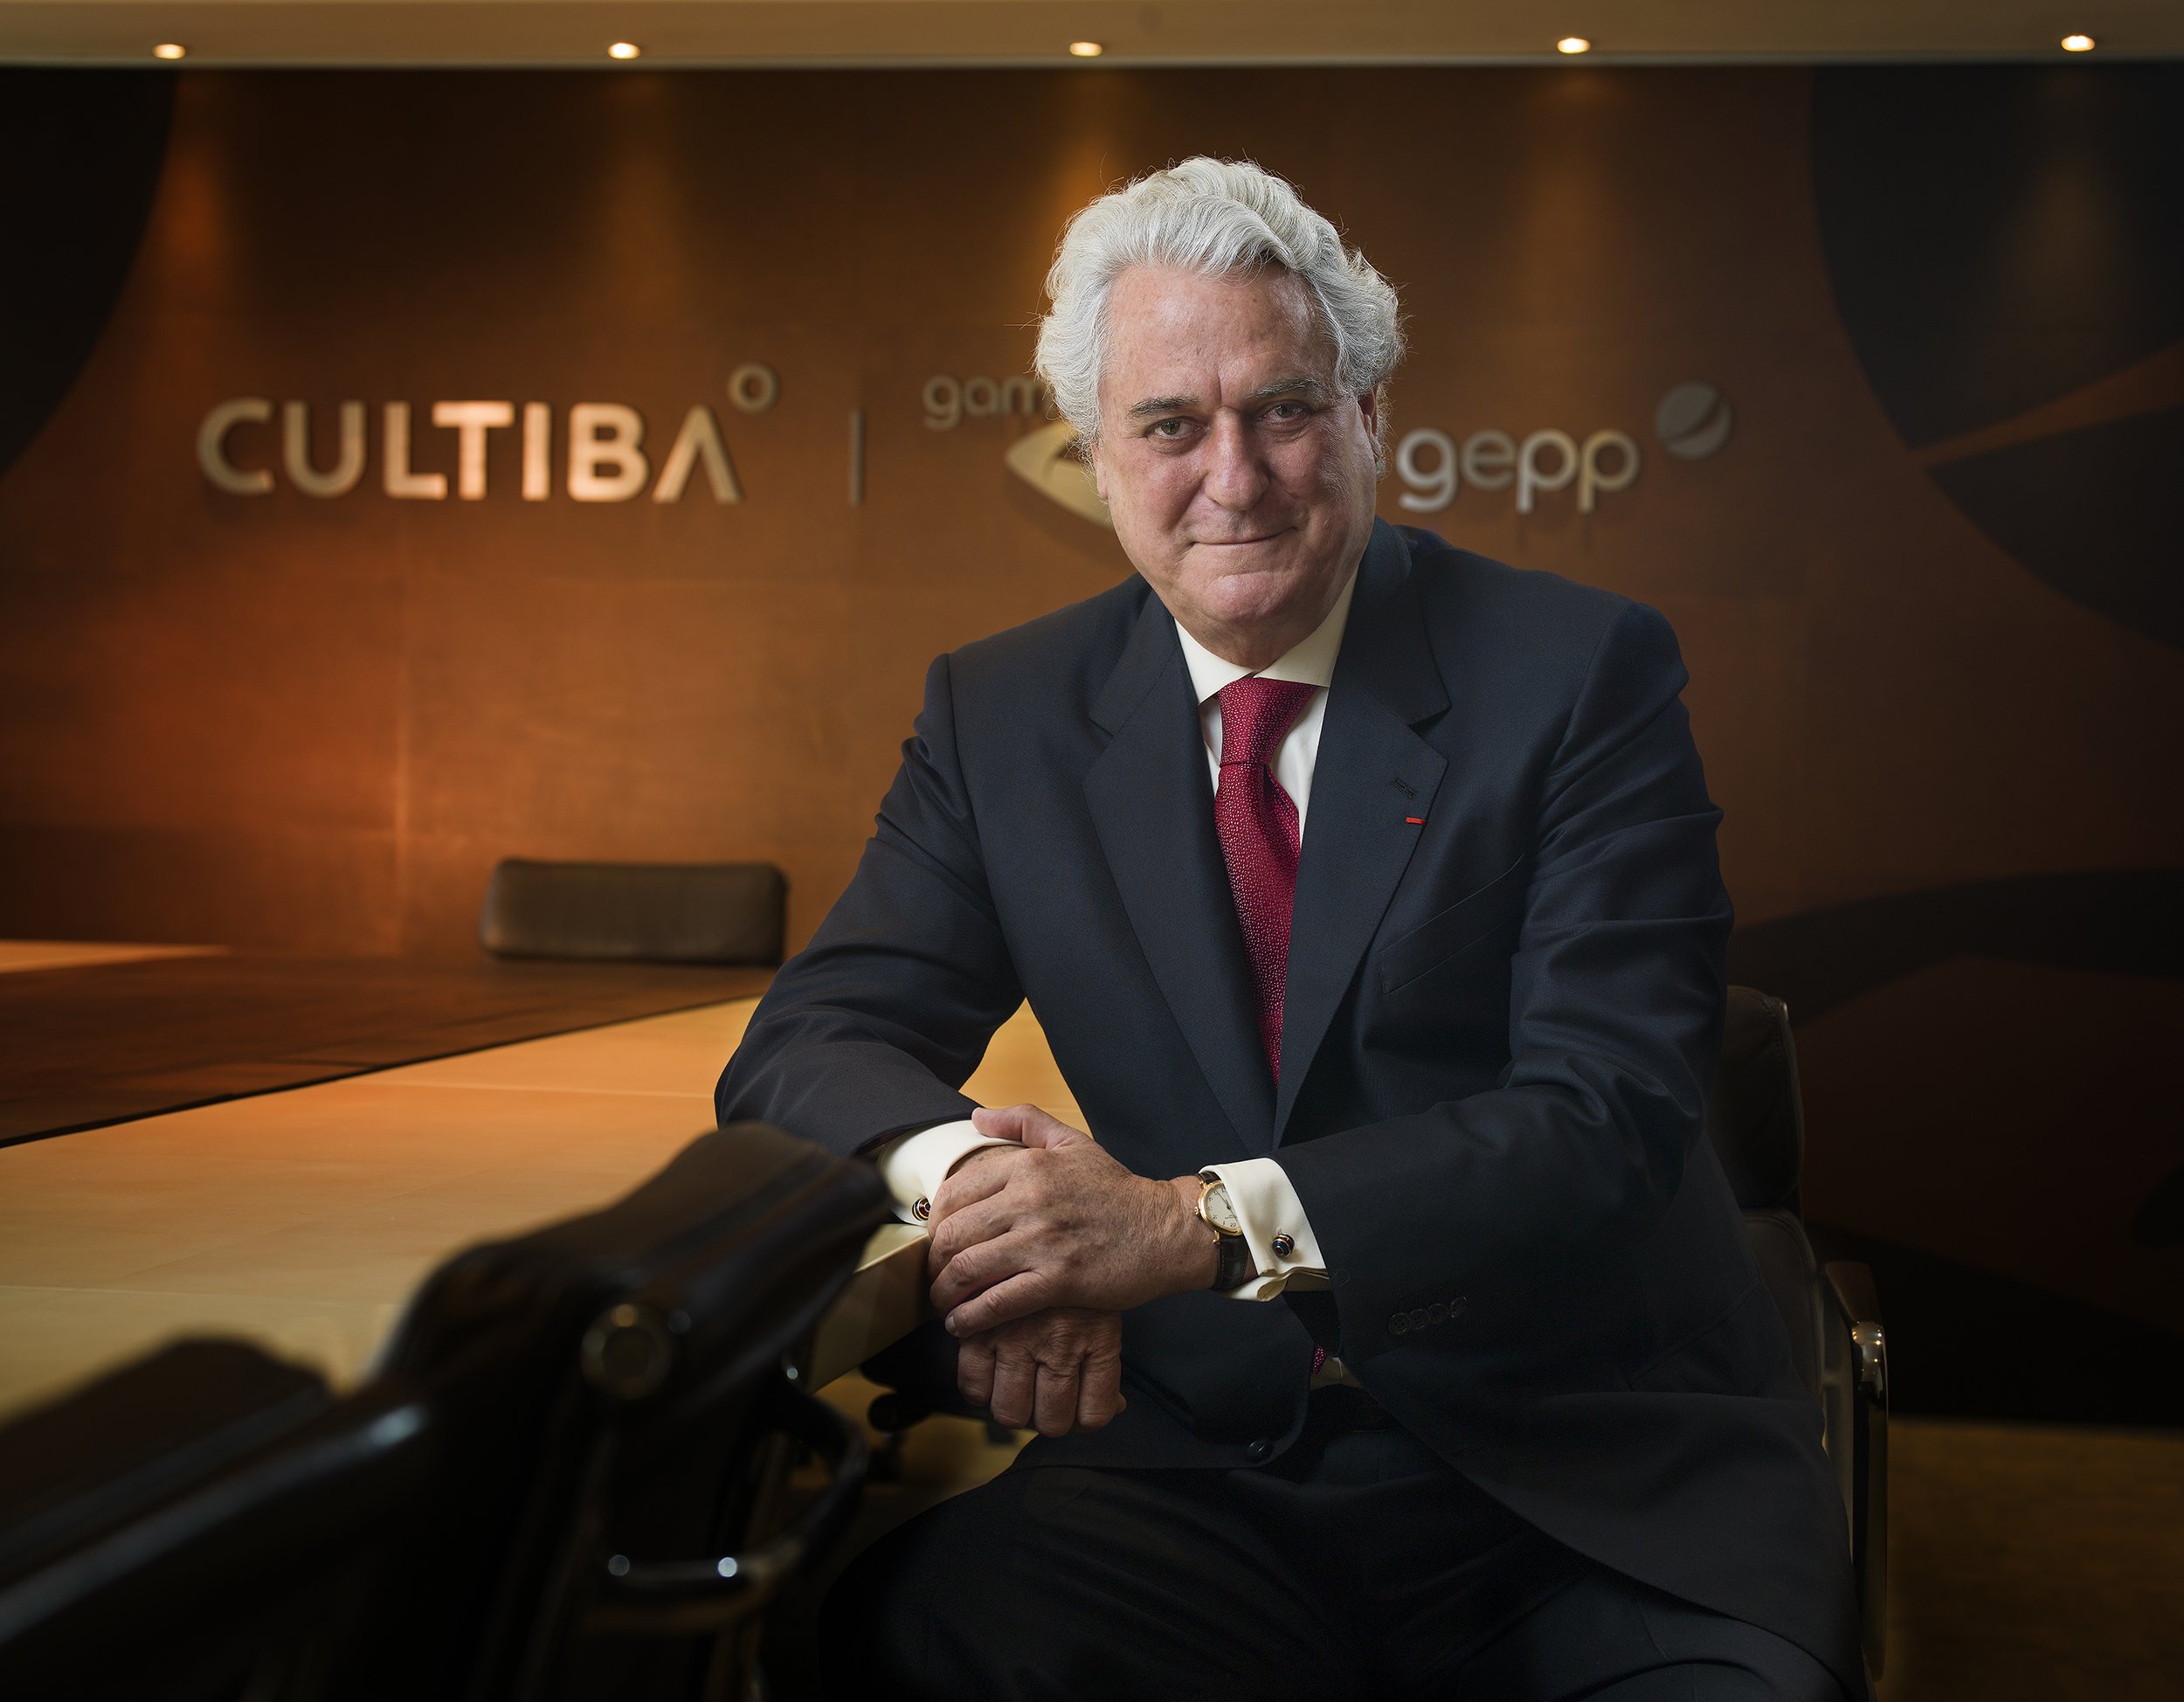 Juan Gallardo Thurlow, President of Cultiba Group